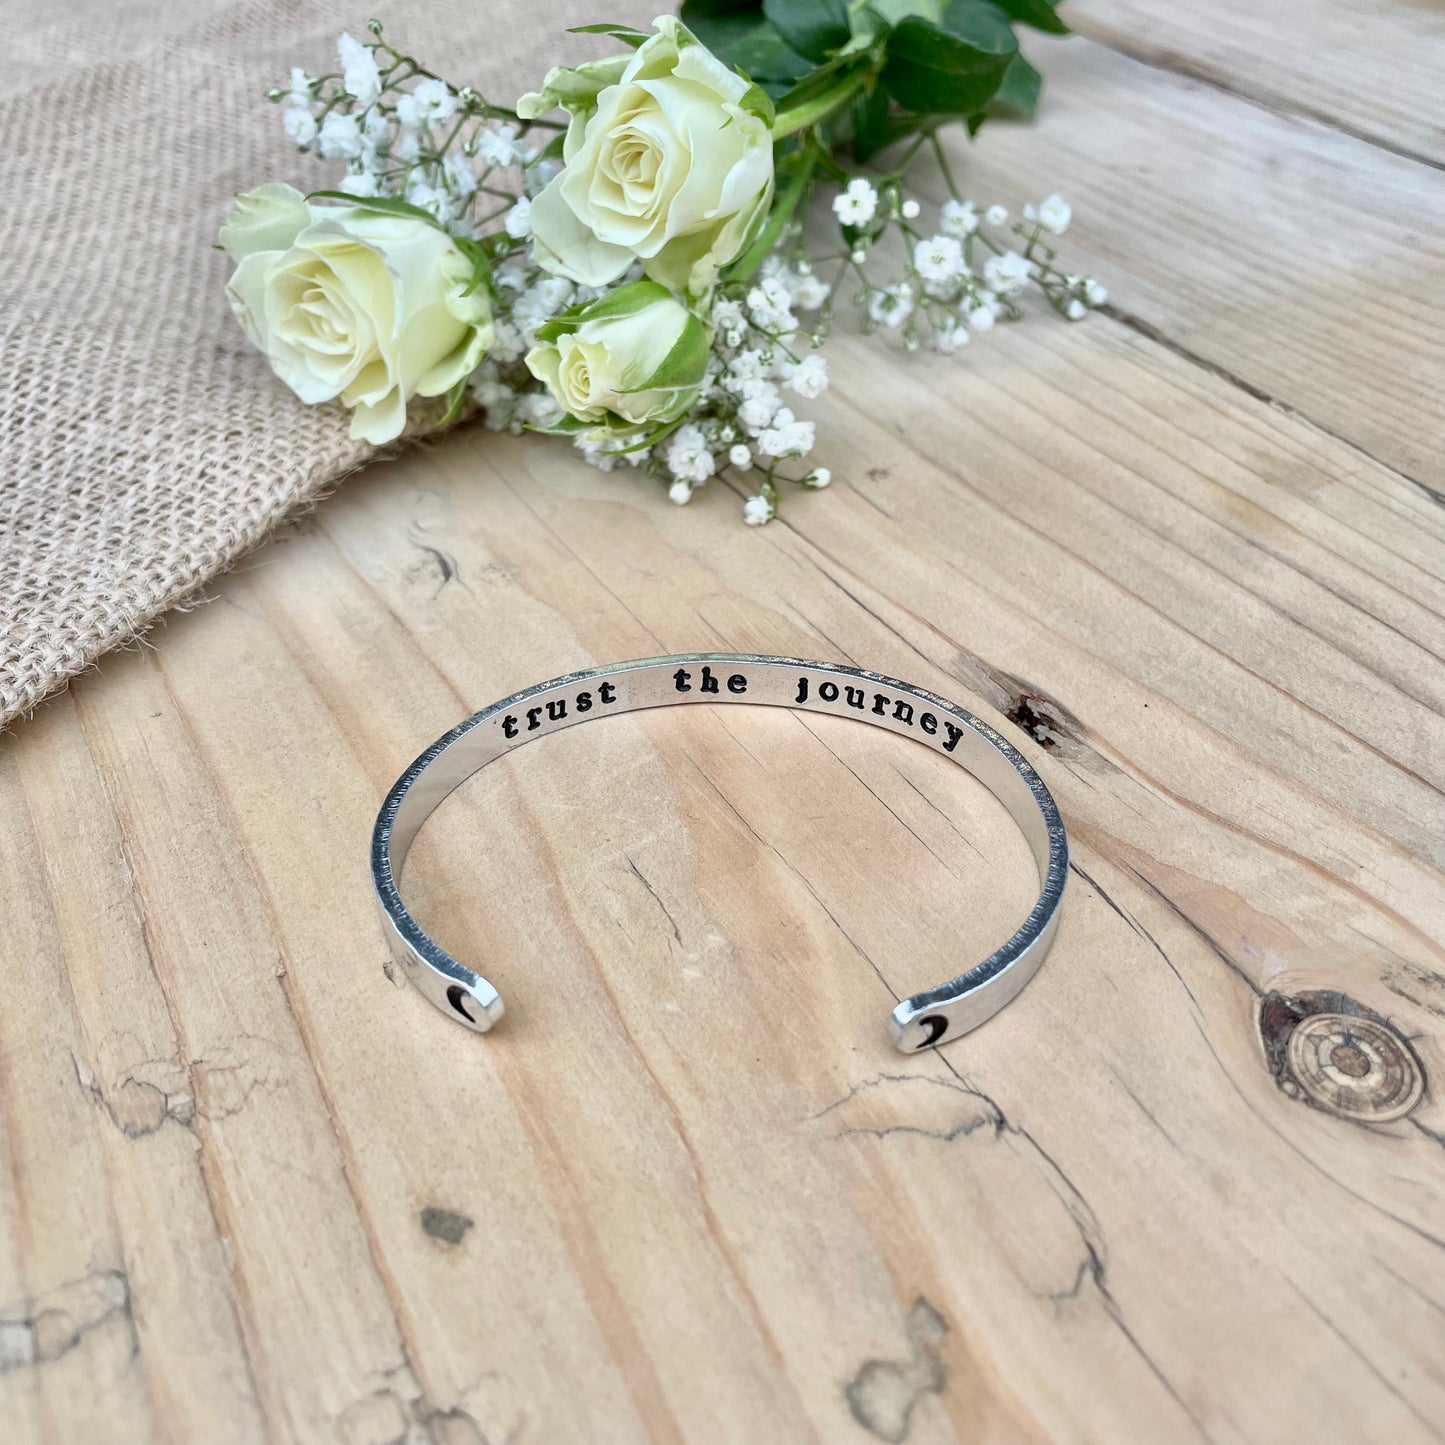 Trust the journey - Textured Bracelet- Hidden Message - Affirmation Band